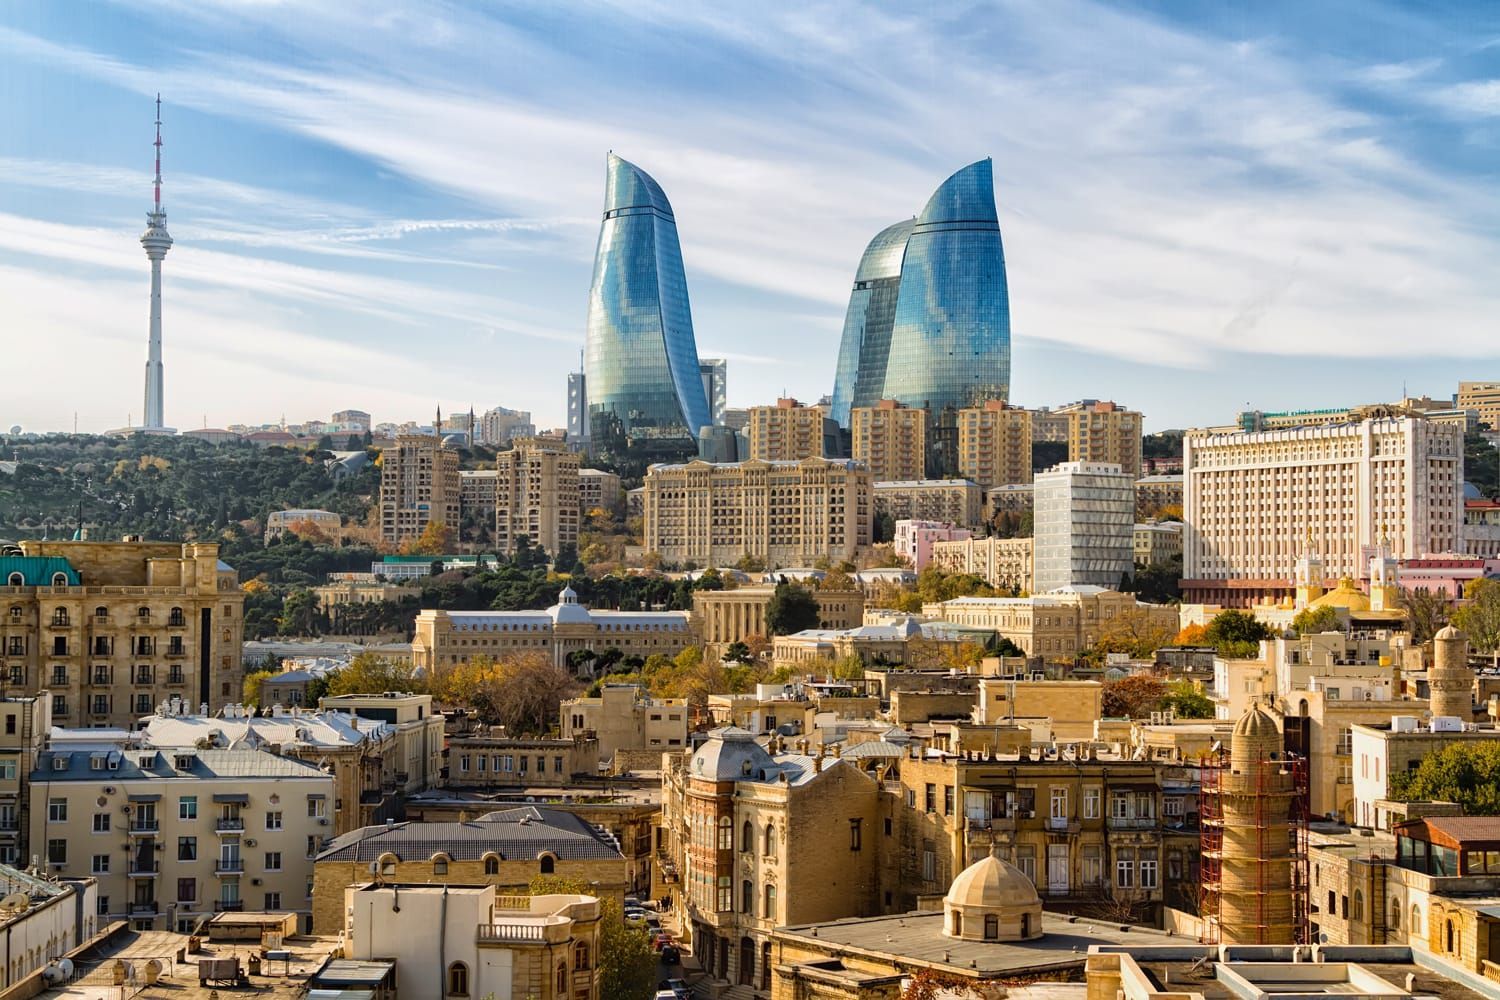 Azerbaijan sees growth in number of travelers